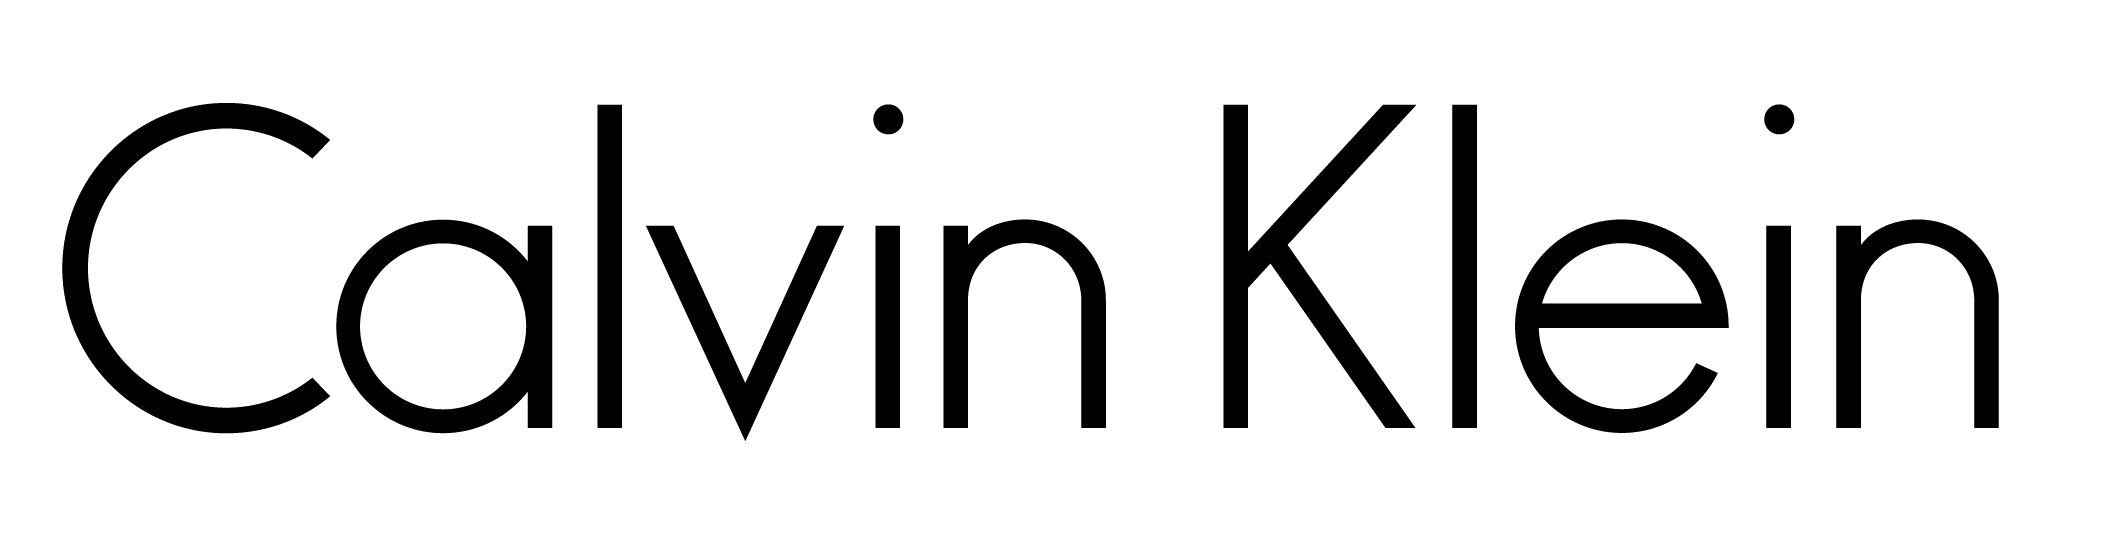 Calvin Klein логотип PNG